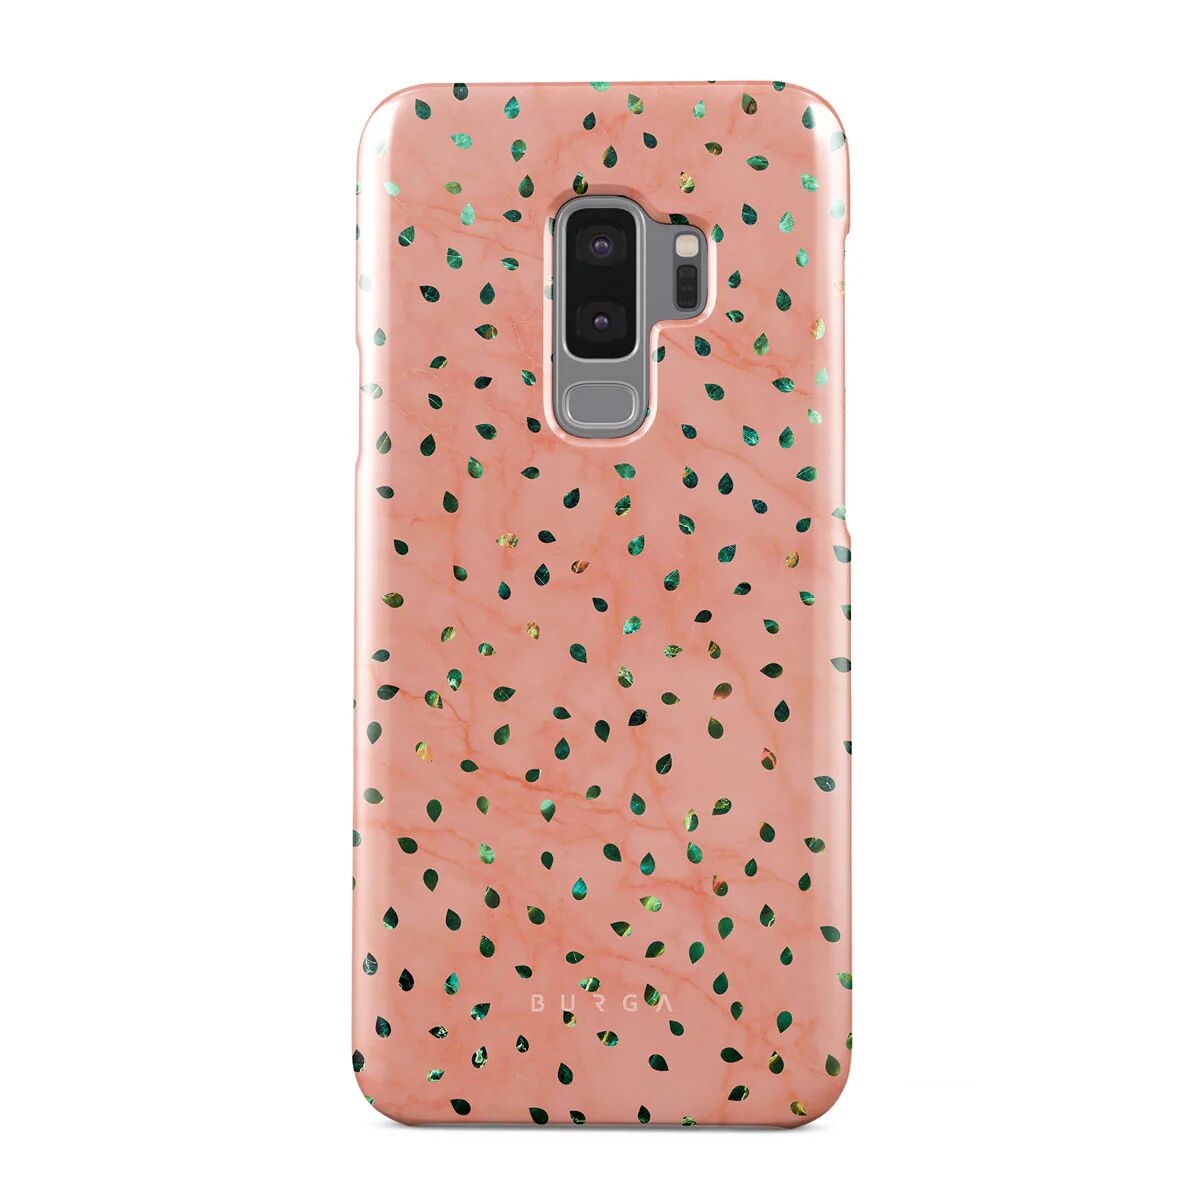 BURGA Watermelon Shake - Samsung Galaxy S9 Plus Case